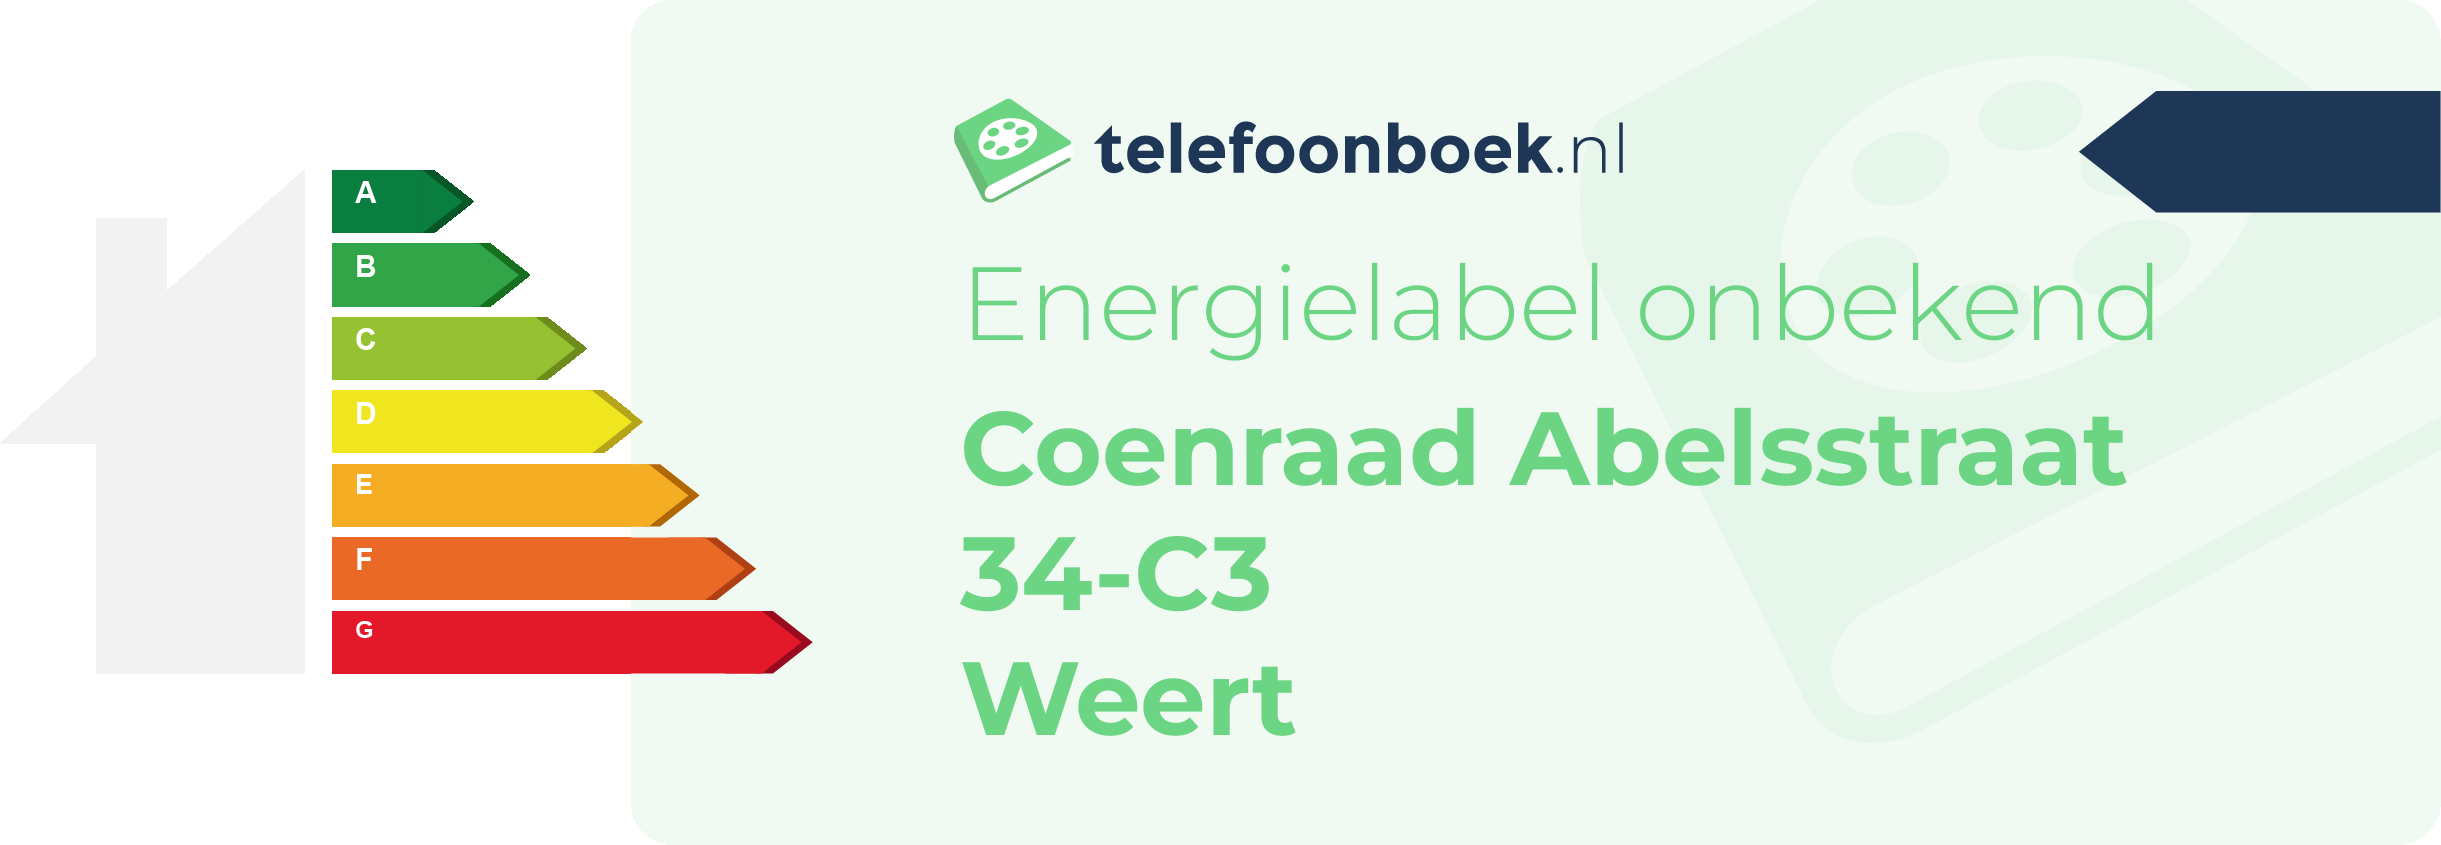 Energielabel Coenraad Abelsstraat 34-C3 Weert